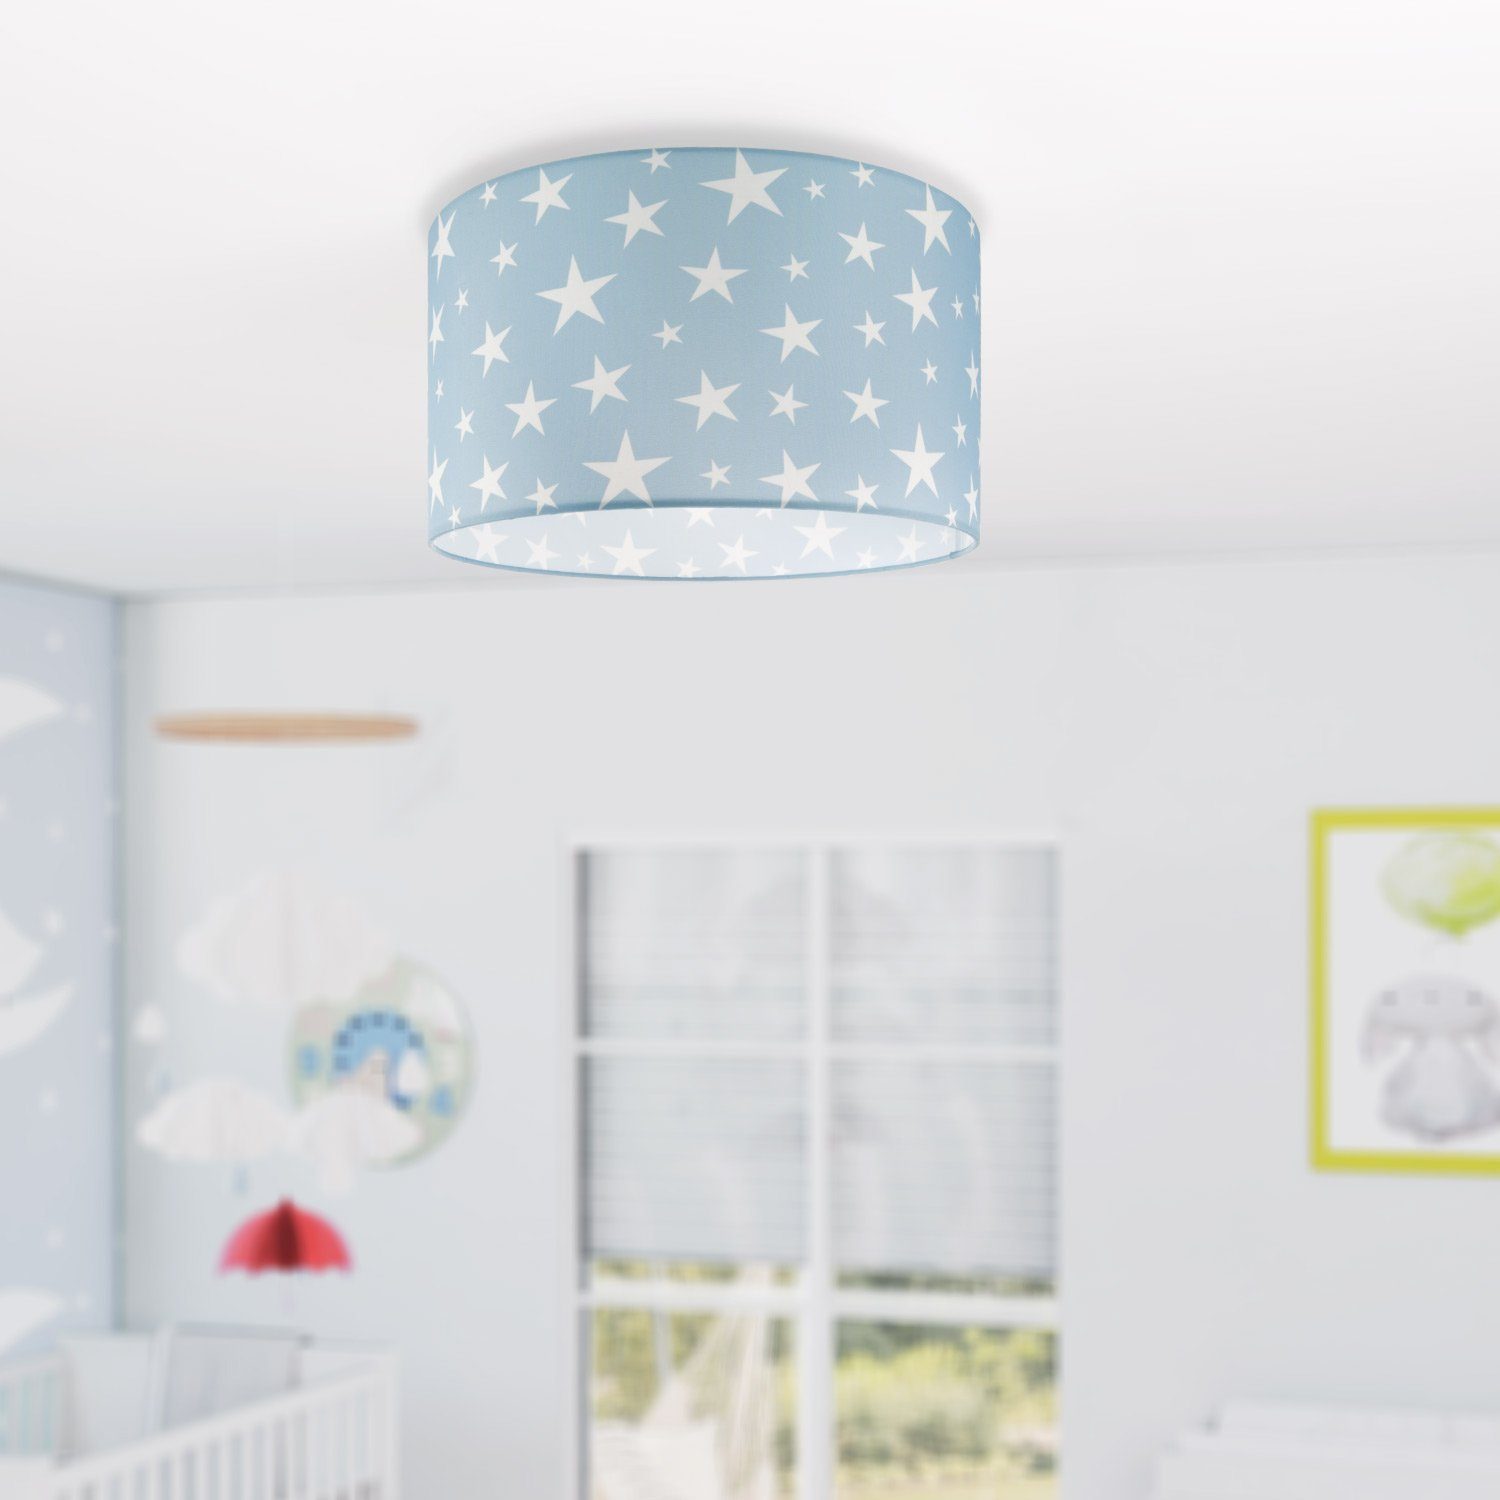 Capri 315, Home Paco ohne Kinderzimmer Leuchtmittel, E27 Sternenhimmel Motiv LED Deckenlampe Kinderlampe Deckenleuchte